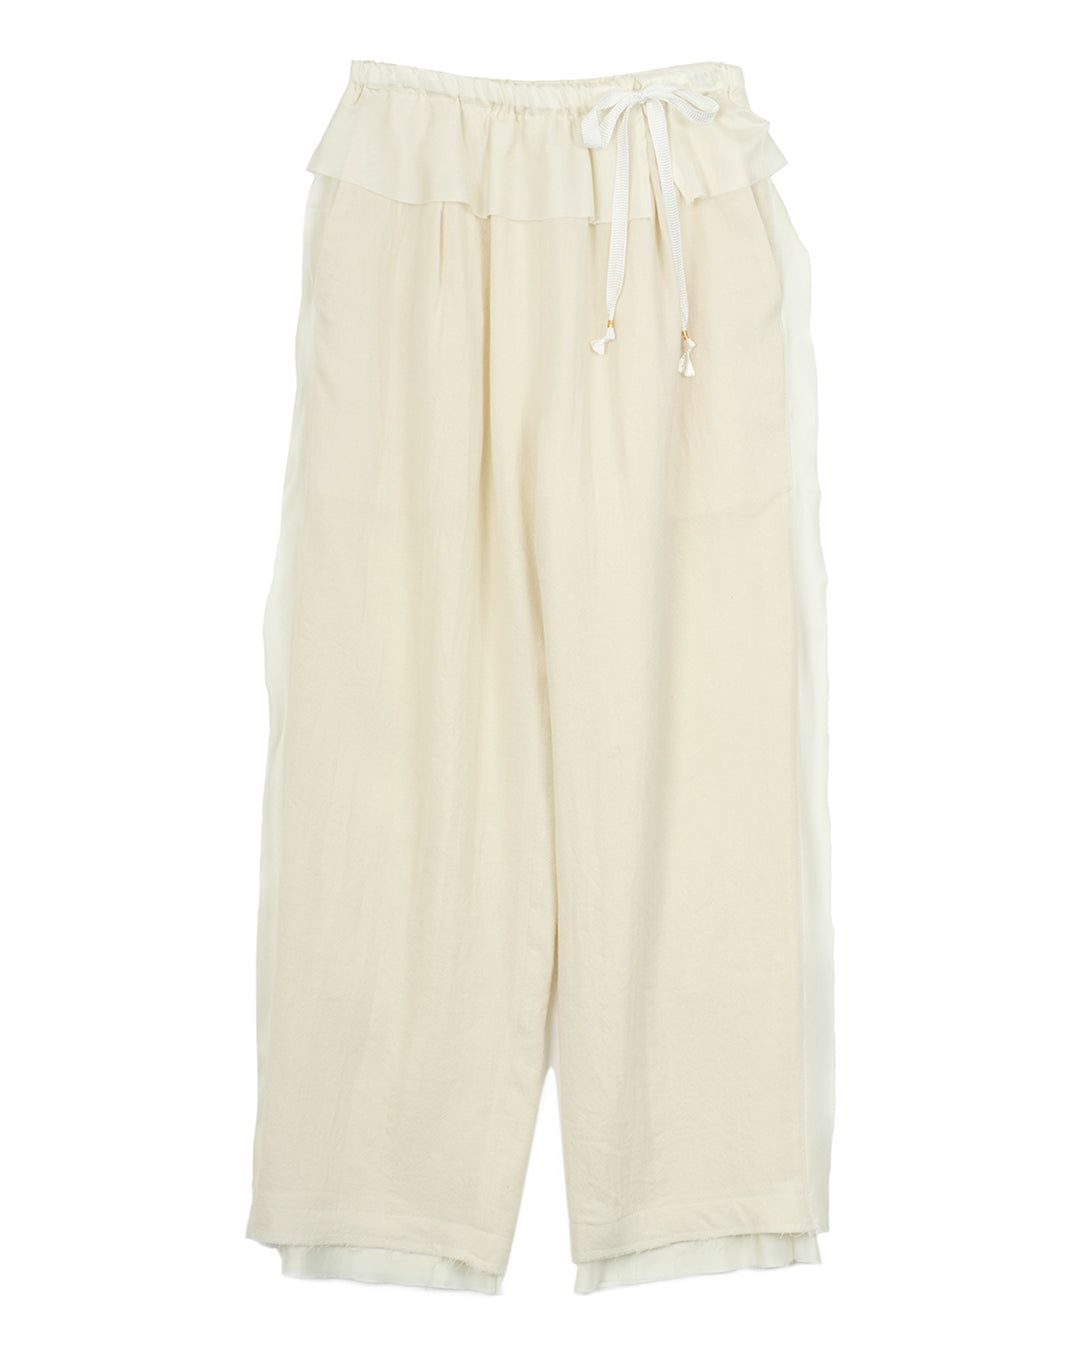 Wool Cutoff Pants off white – LOVE nagoya